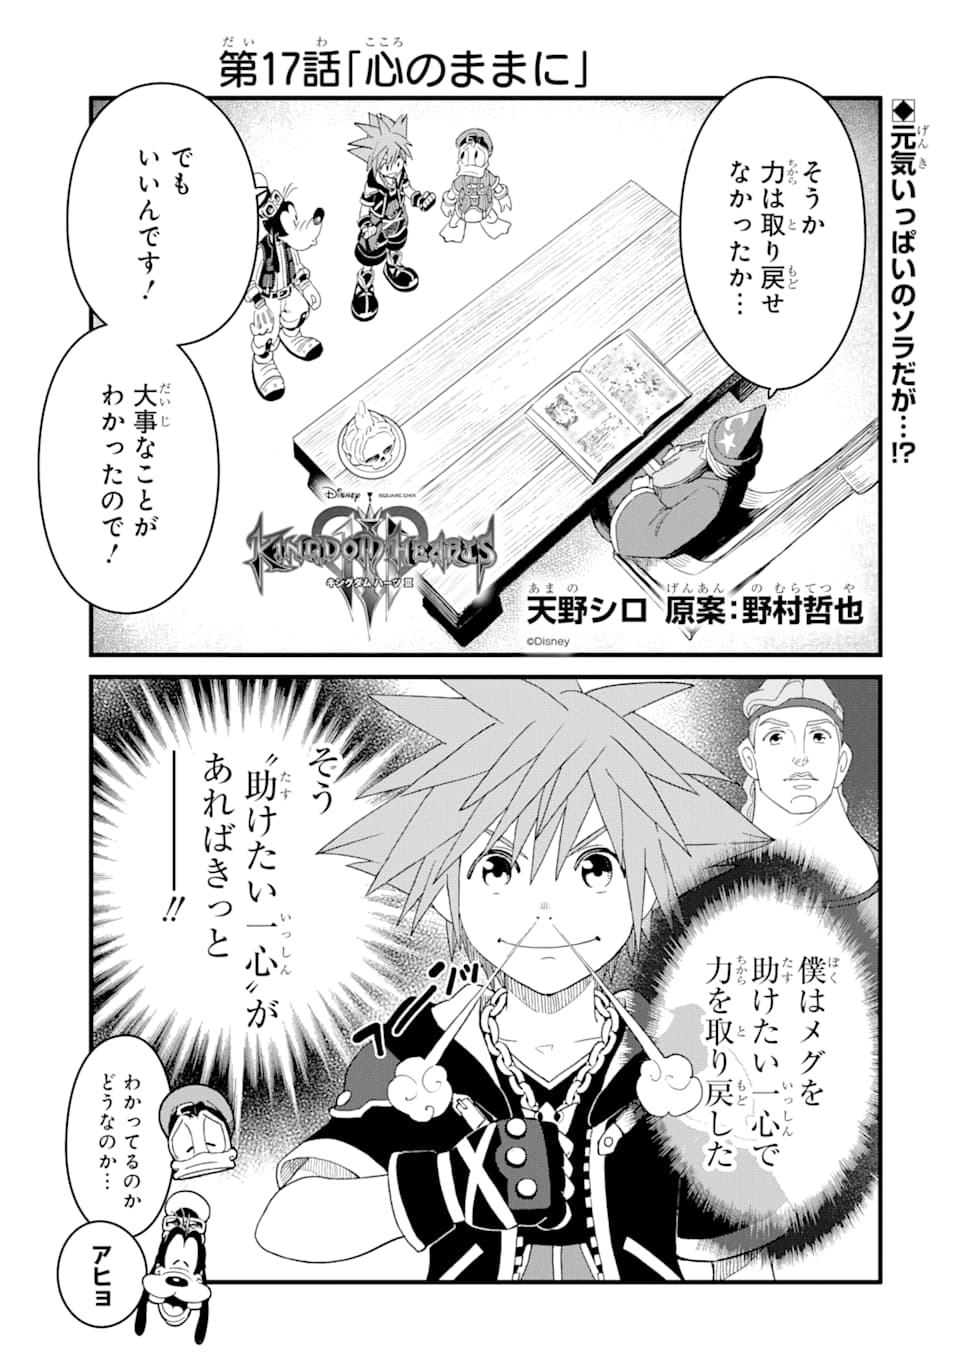 Kingdom Hearts III - Chapter 17 - Page 1